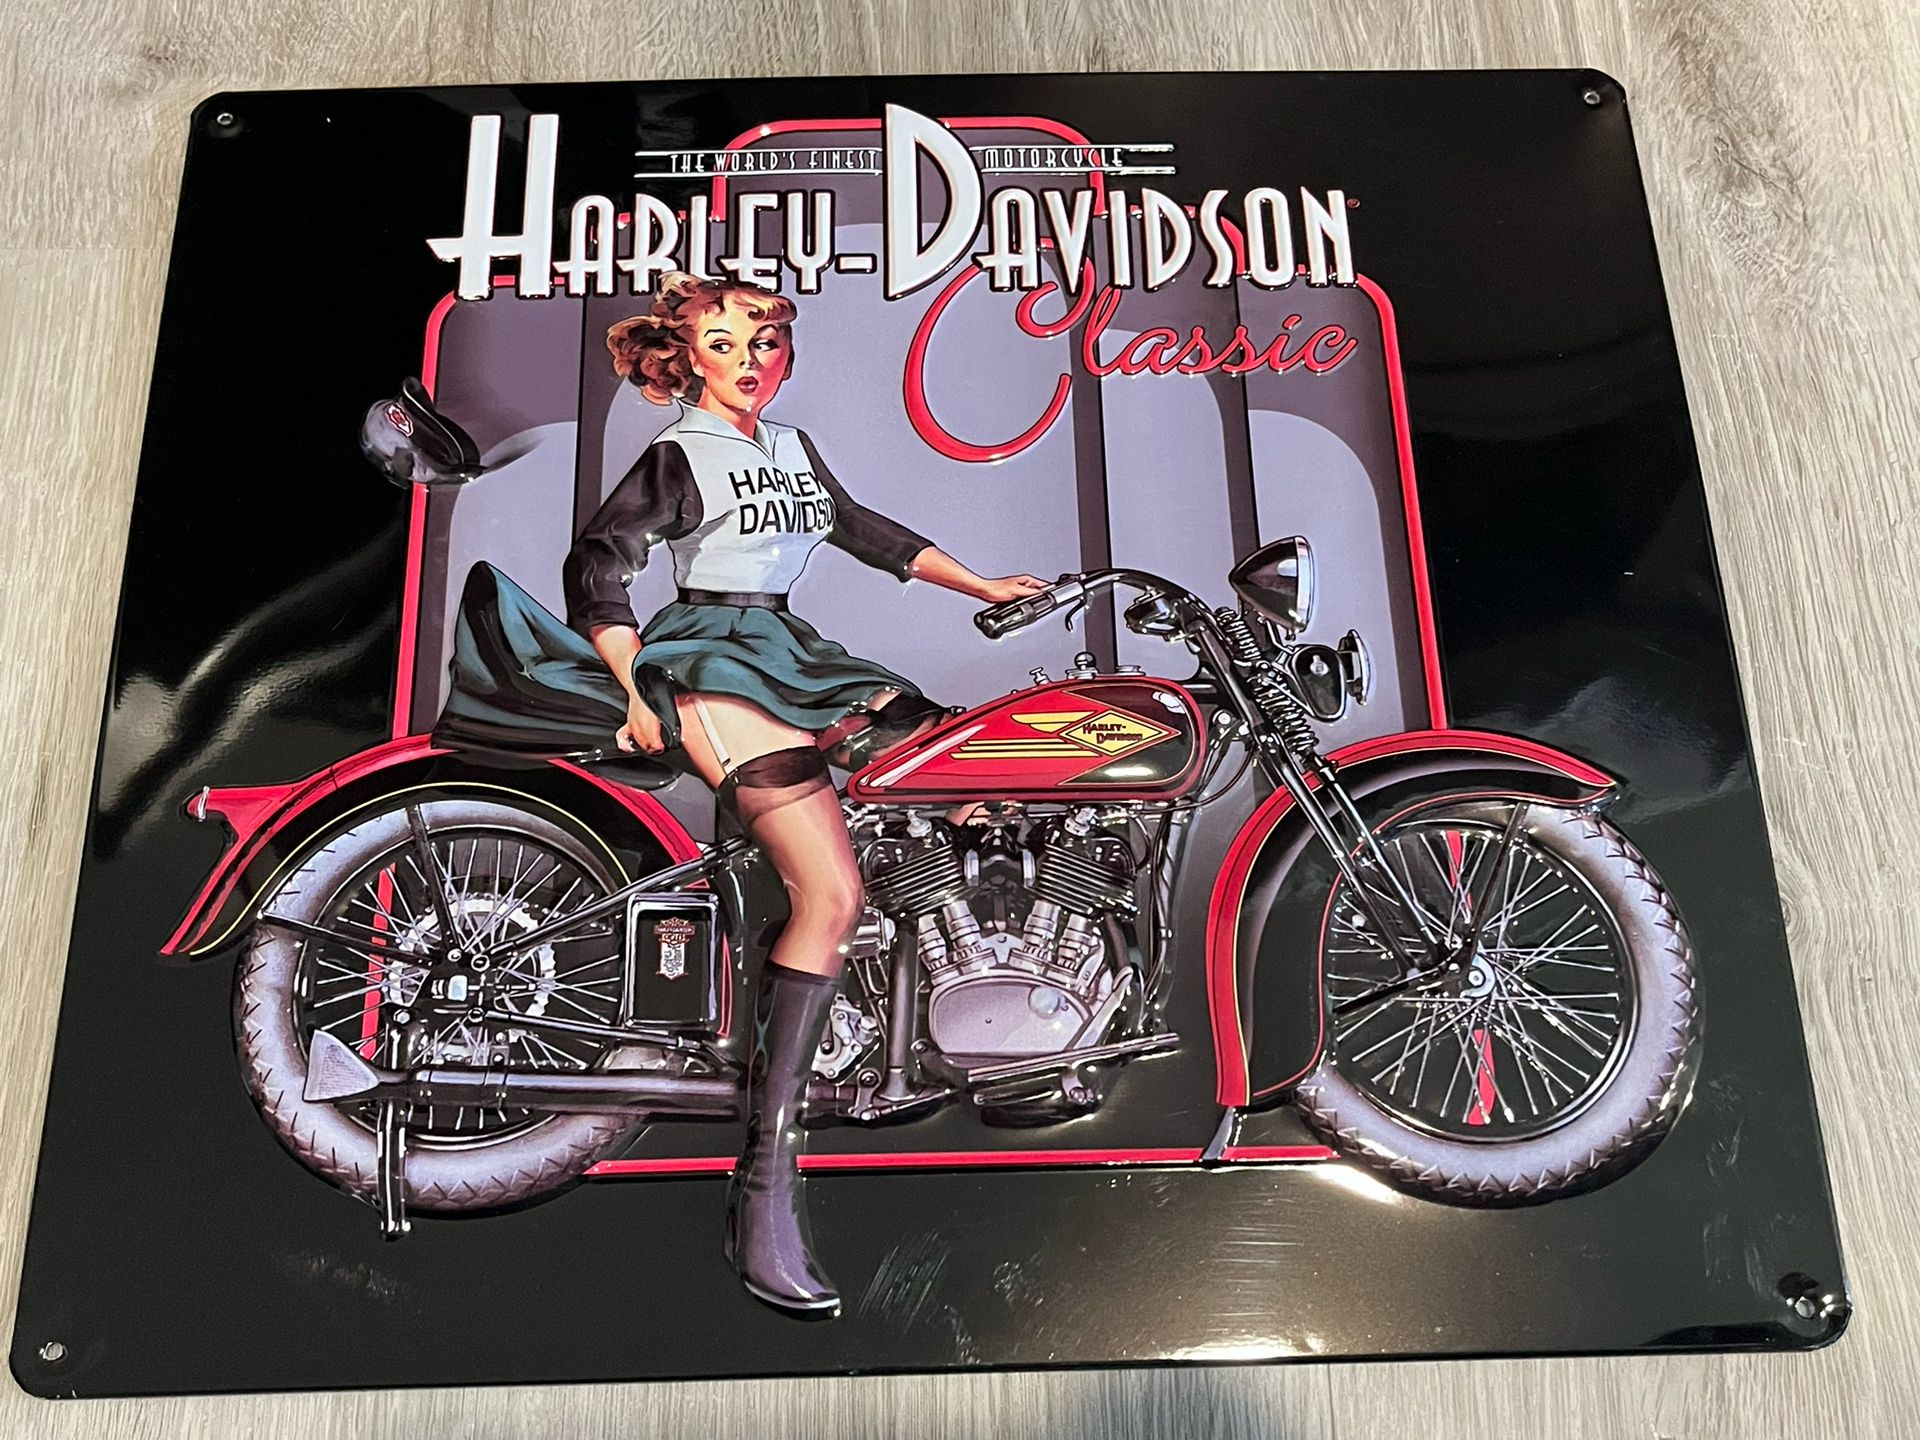 Harley Davidson 3D Tin Sign